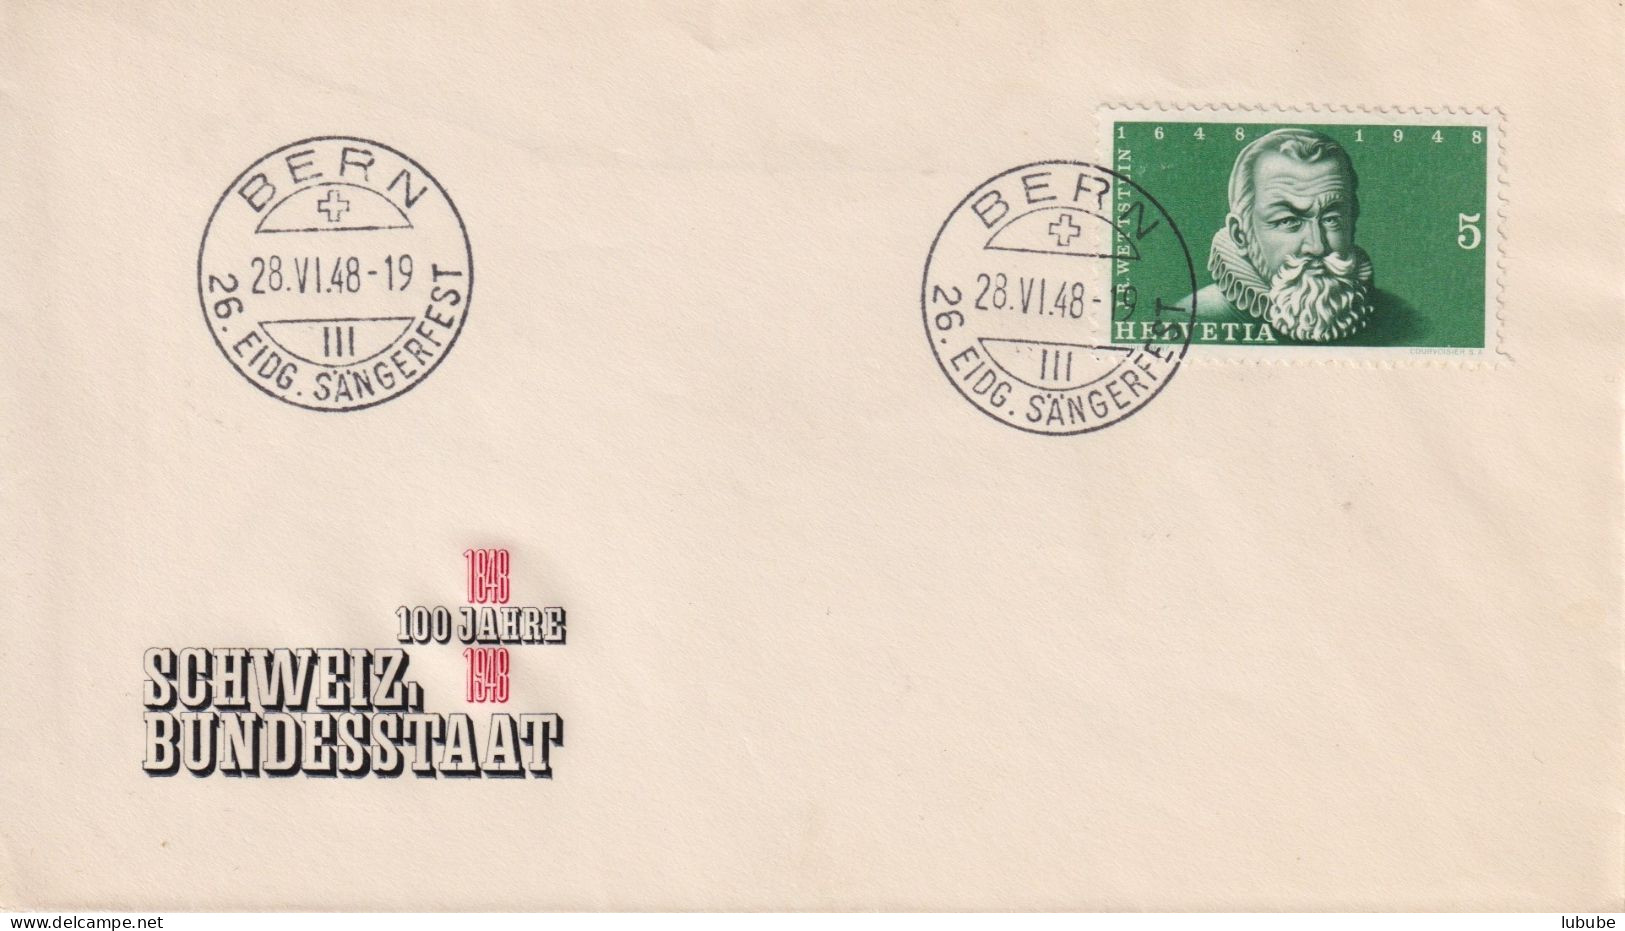 Sonderstempel  "26.Eidg.Sängerfest, Bern"       1948 - Lettres & Documents